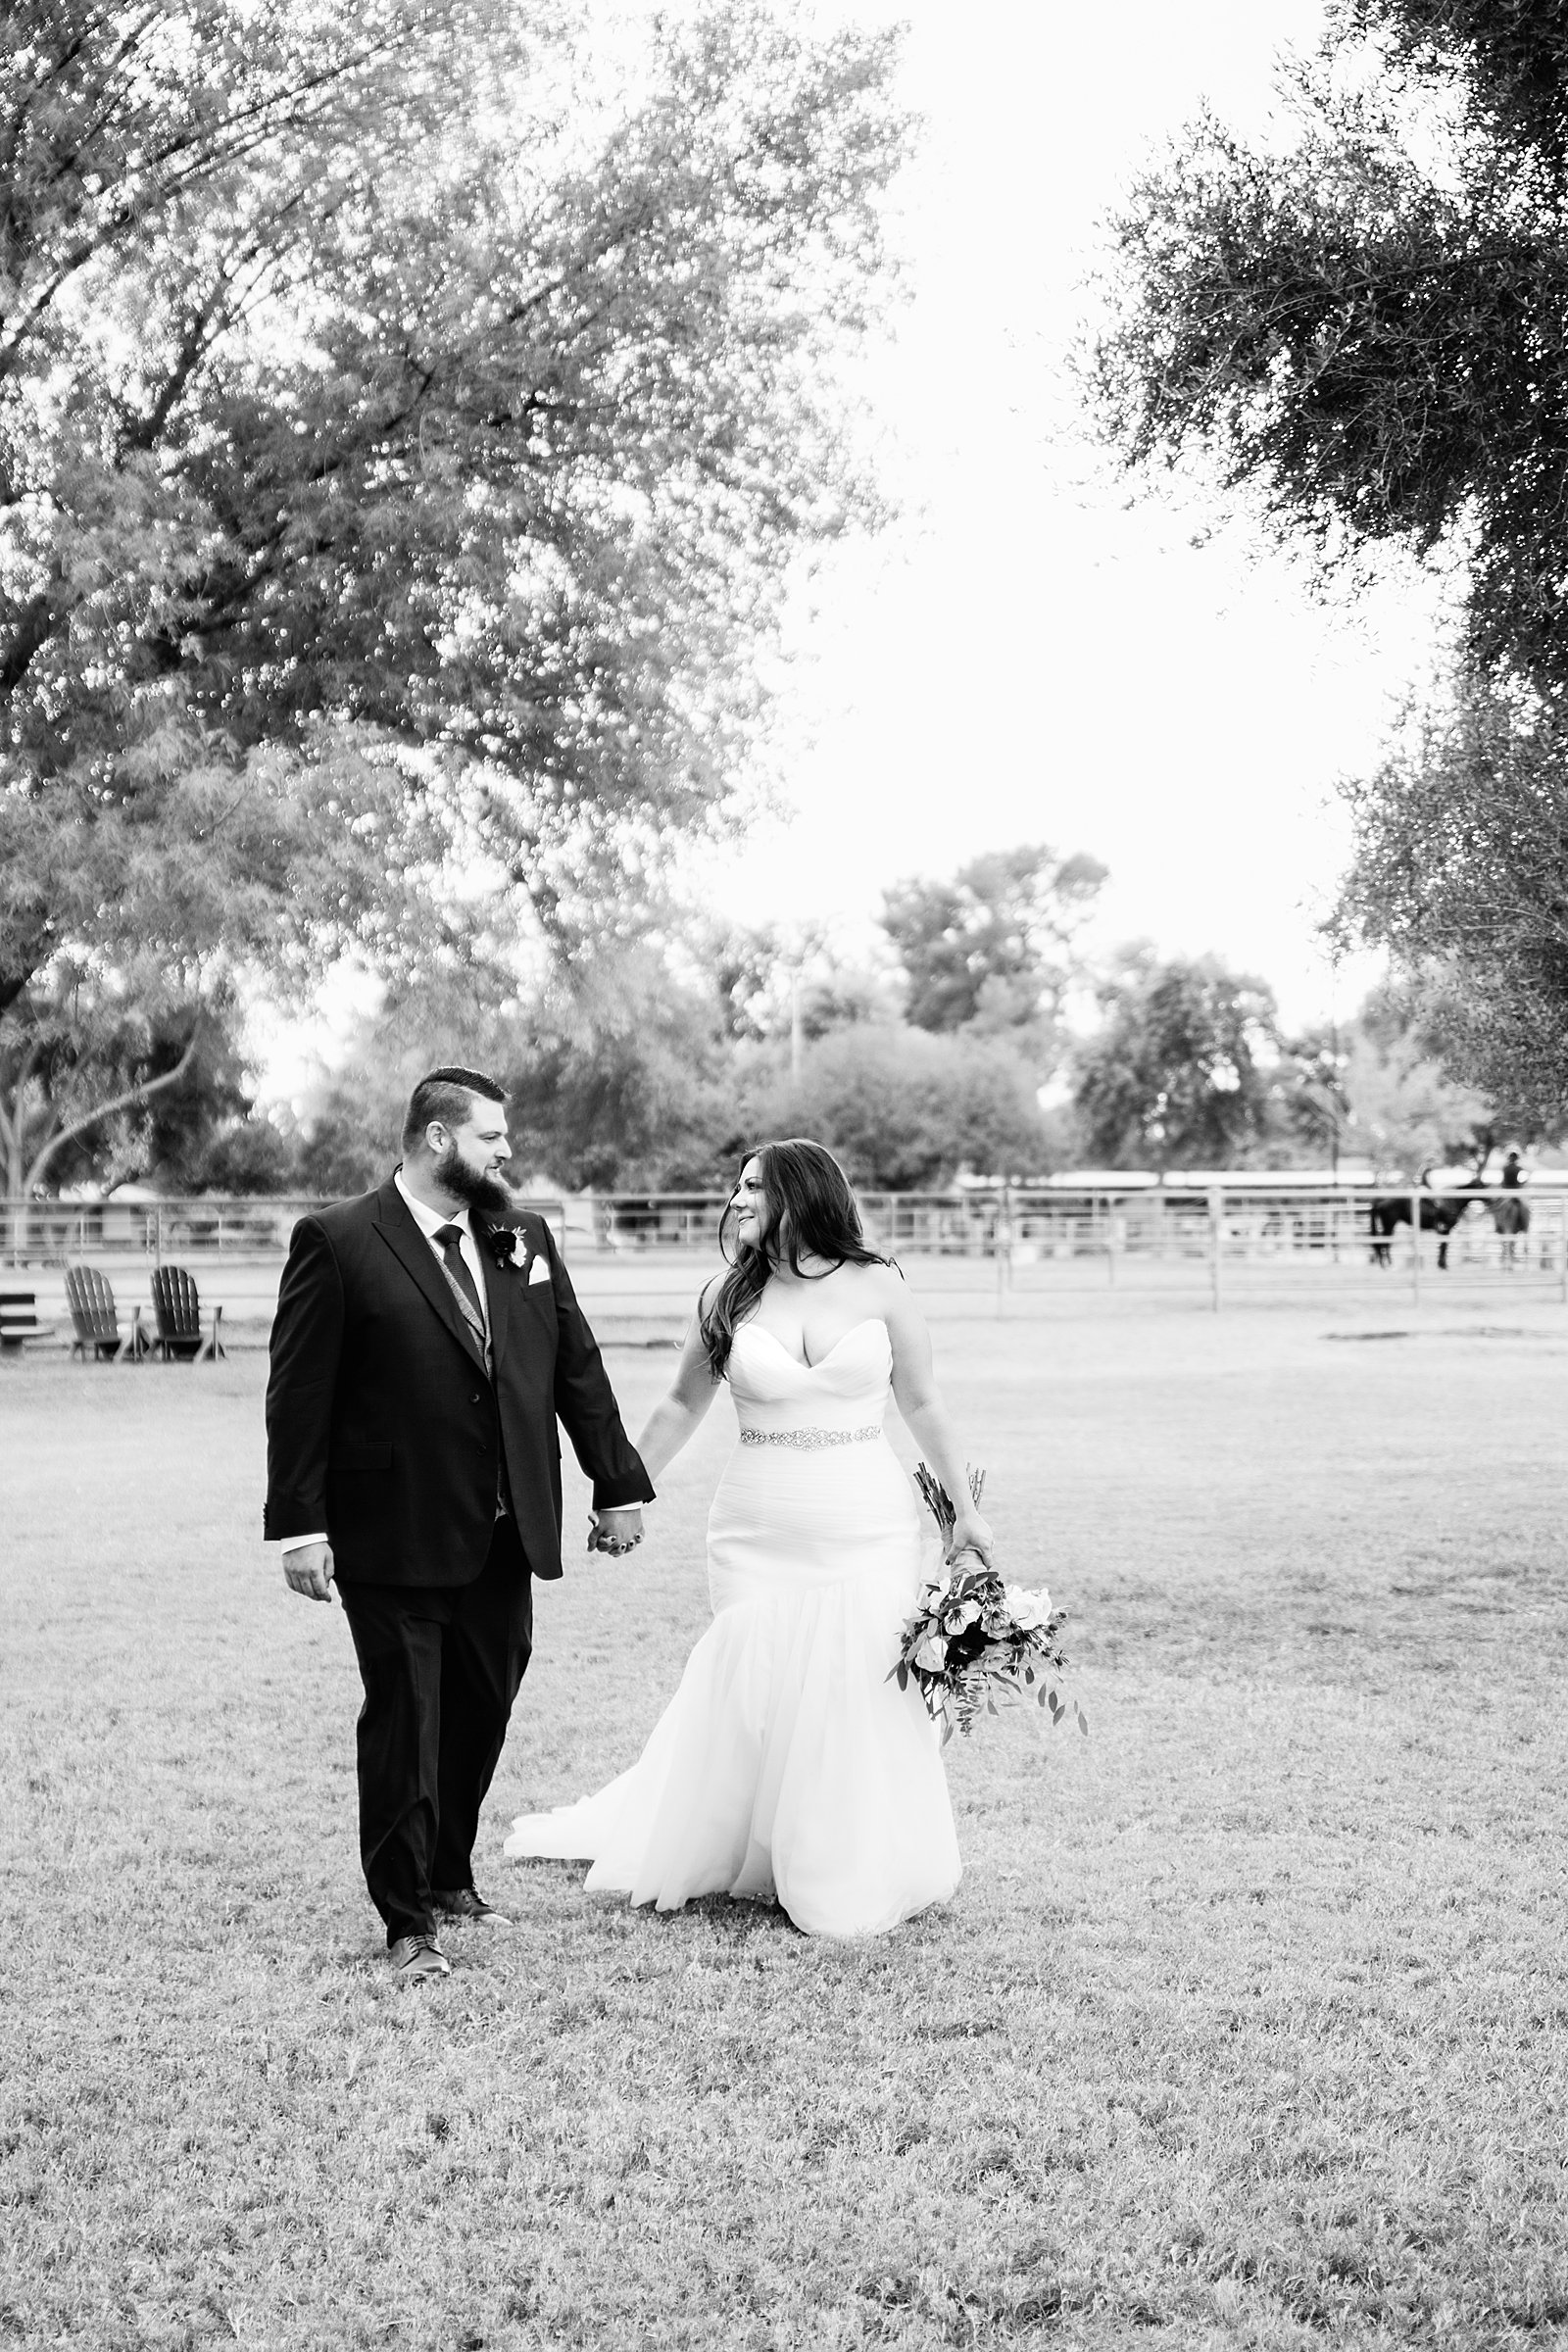 Bride and Groom walking together during their Arizona backyard wedding by Arizona wedding photographer PMA Photography.